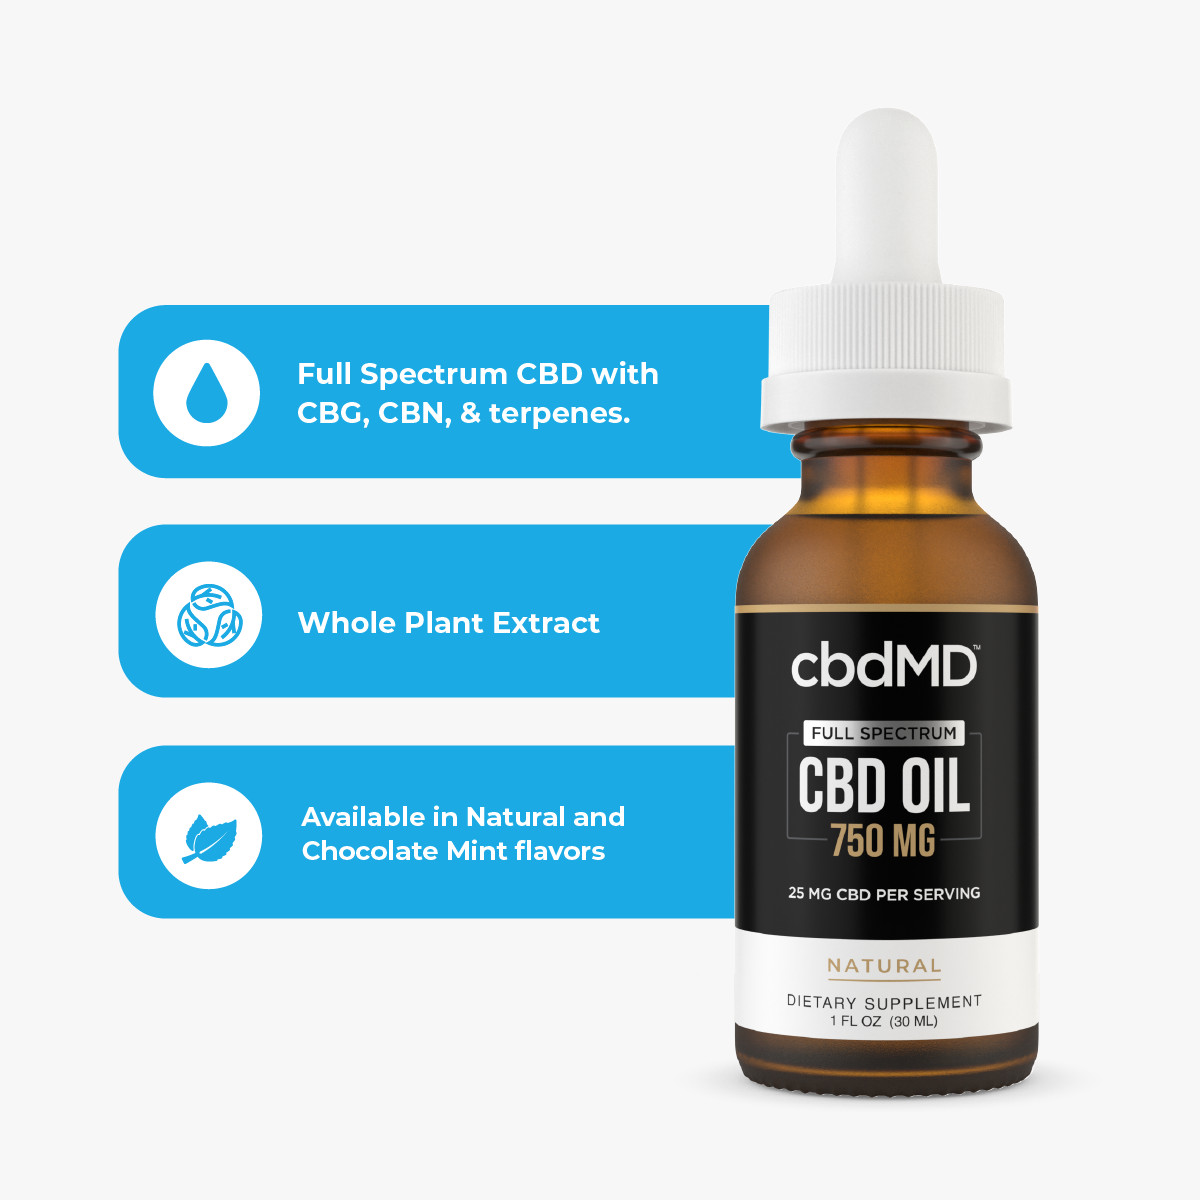 cbdMD, CBD Oil Tincture, Full Spectrum, Natural Flavor, 1oz, 750mg CBD 1